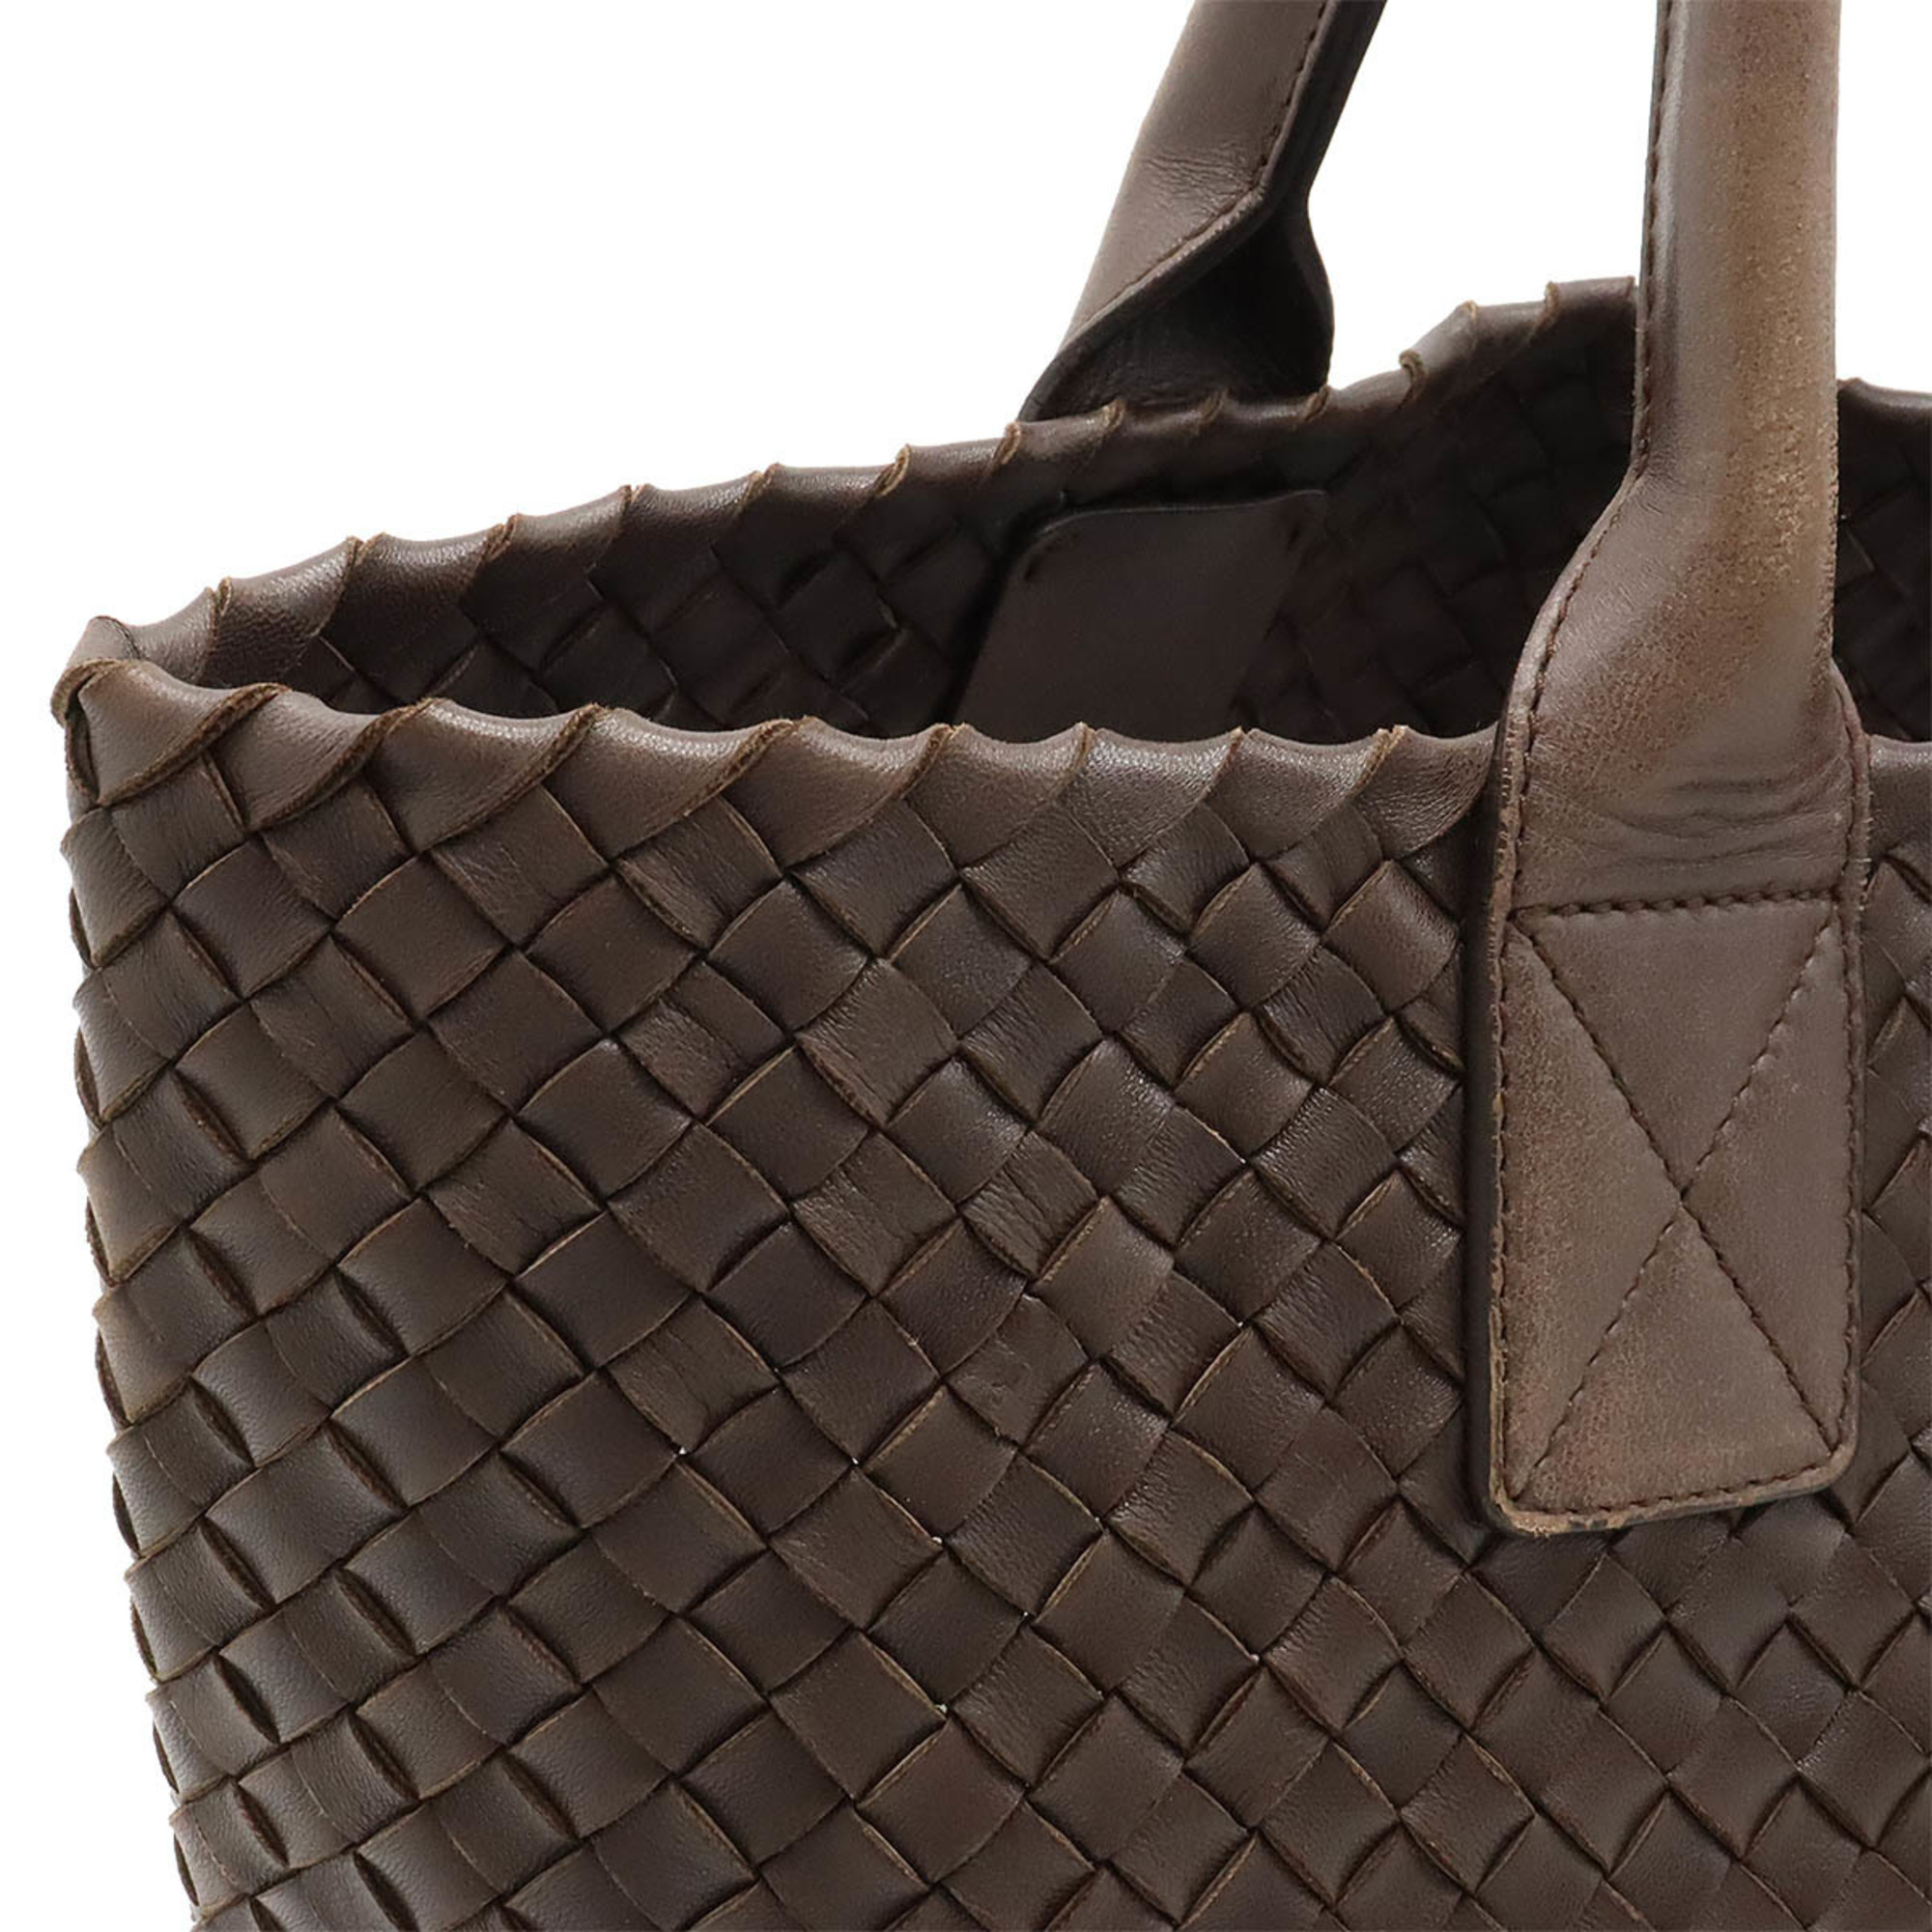 BOTTEGA VENETA Intrecciato Cabas PM Tote Bag Shoulder Leather Dark Brown Limited to 250 pieces 141498